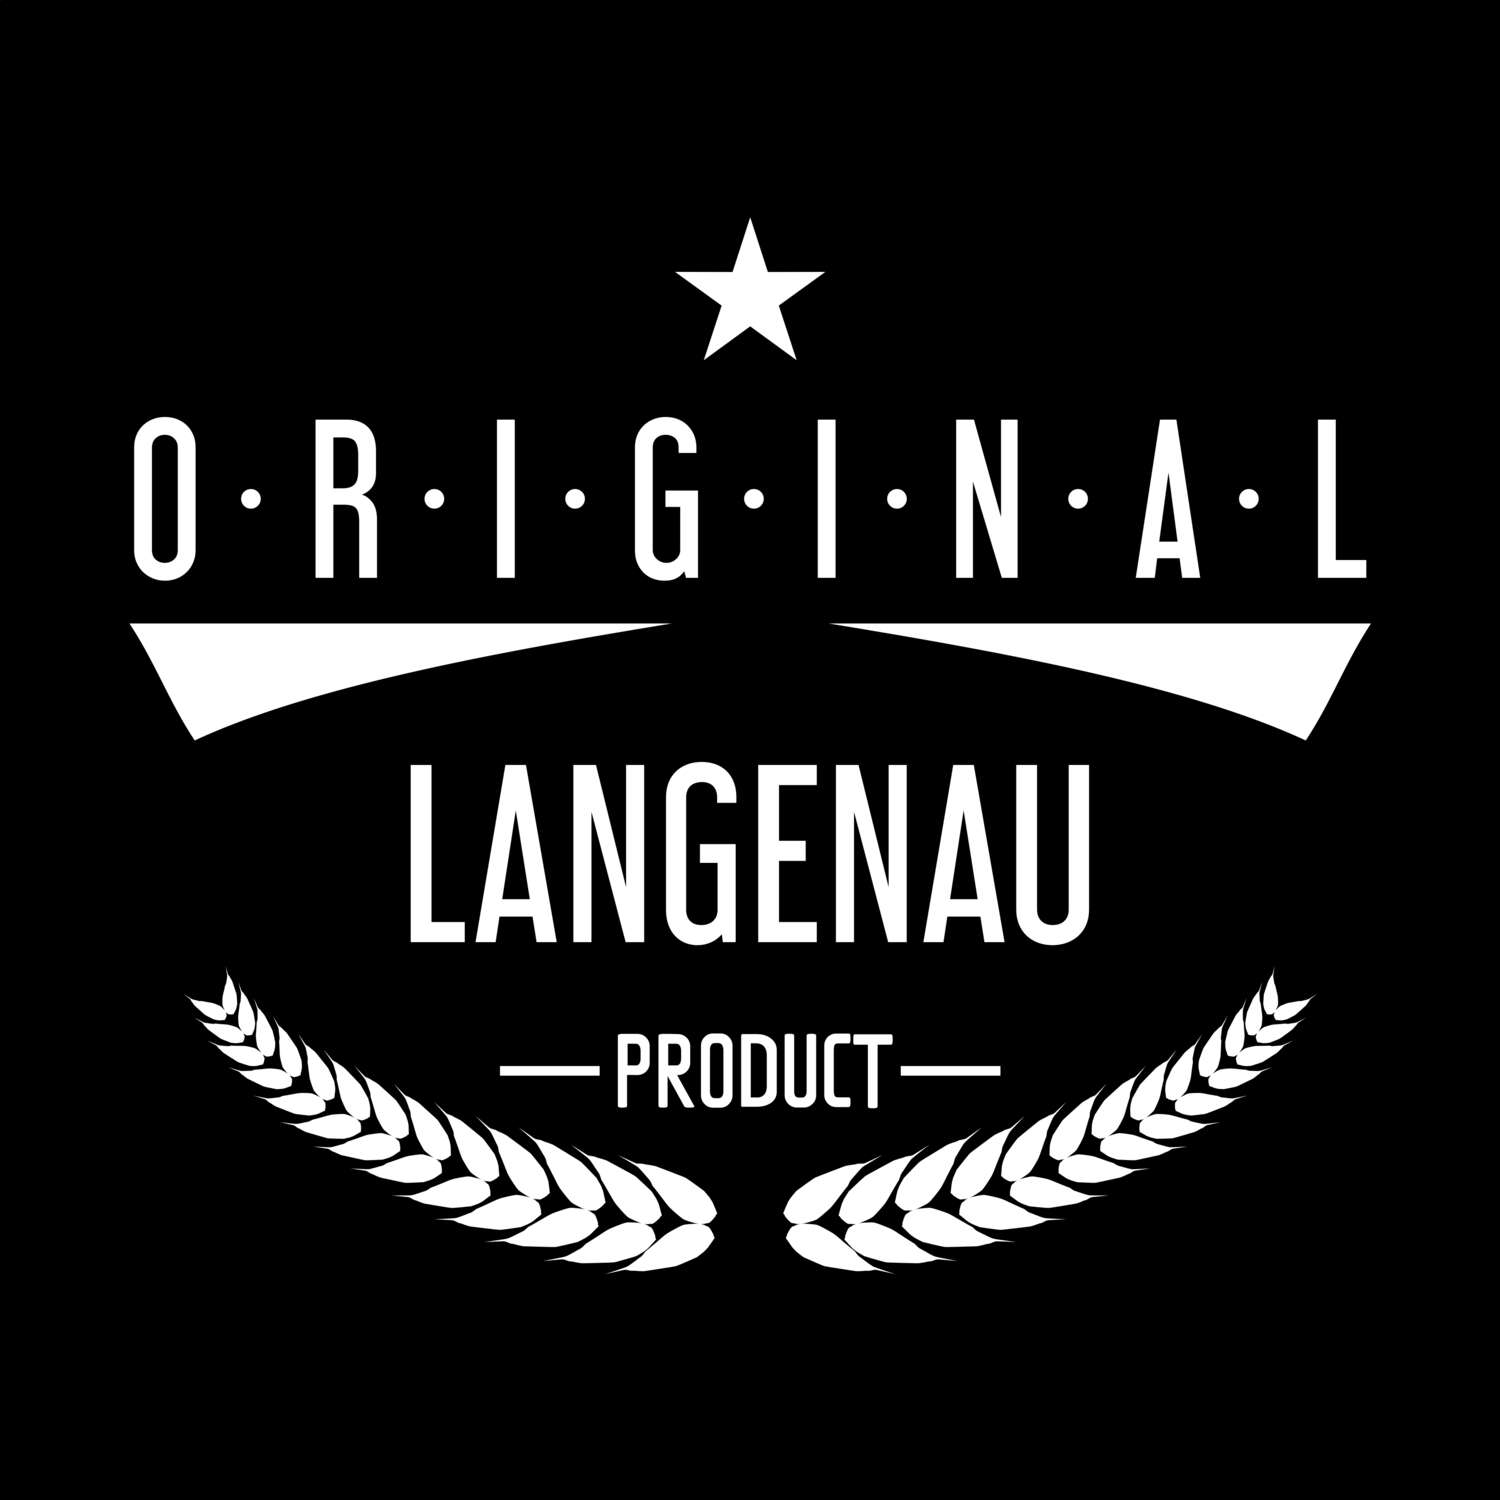 Langenau T-Shirt »Original Product«